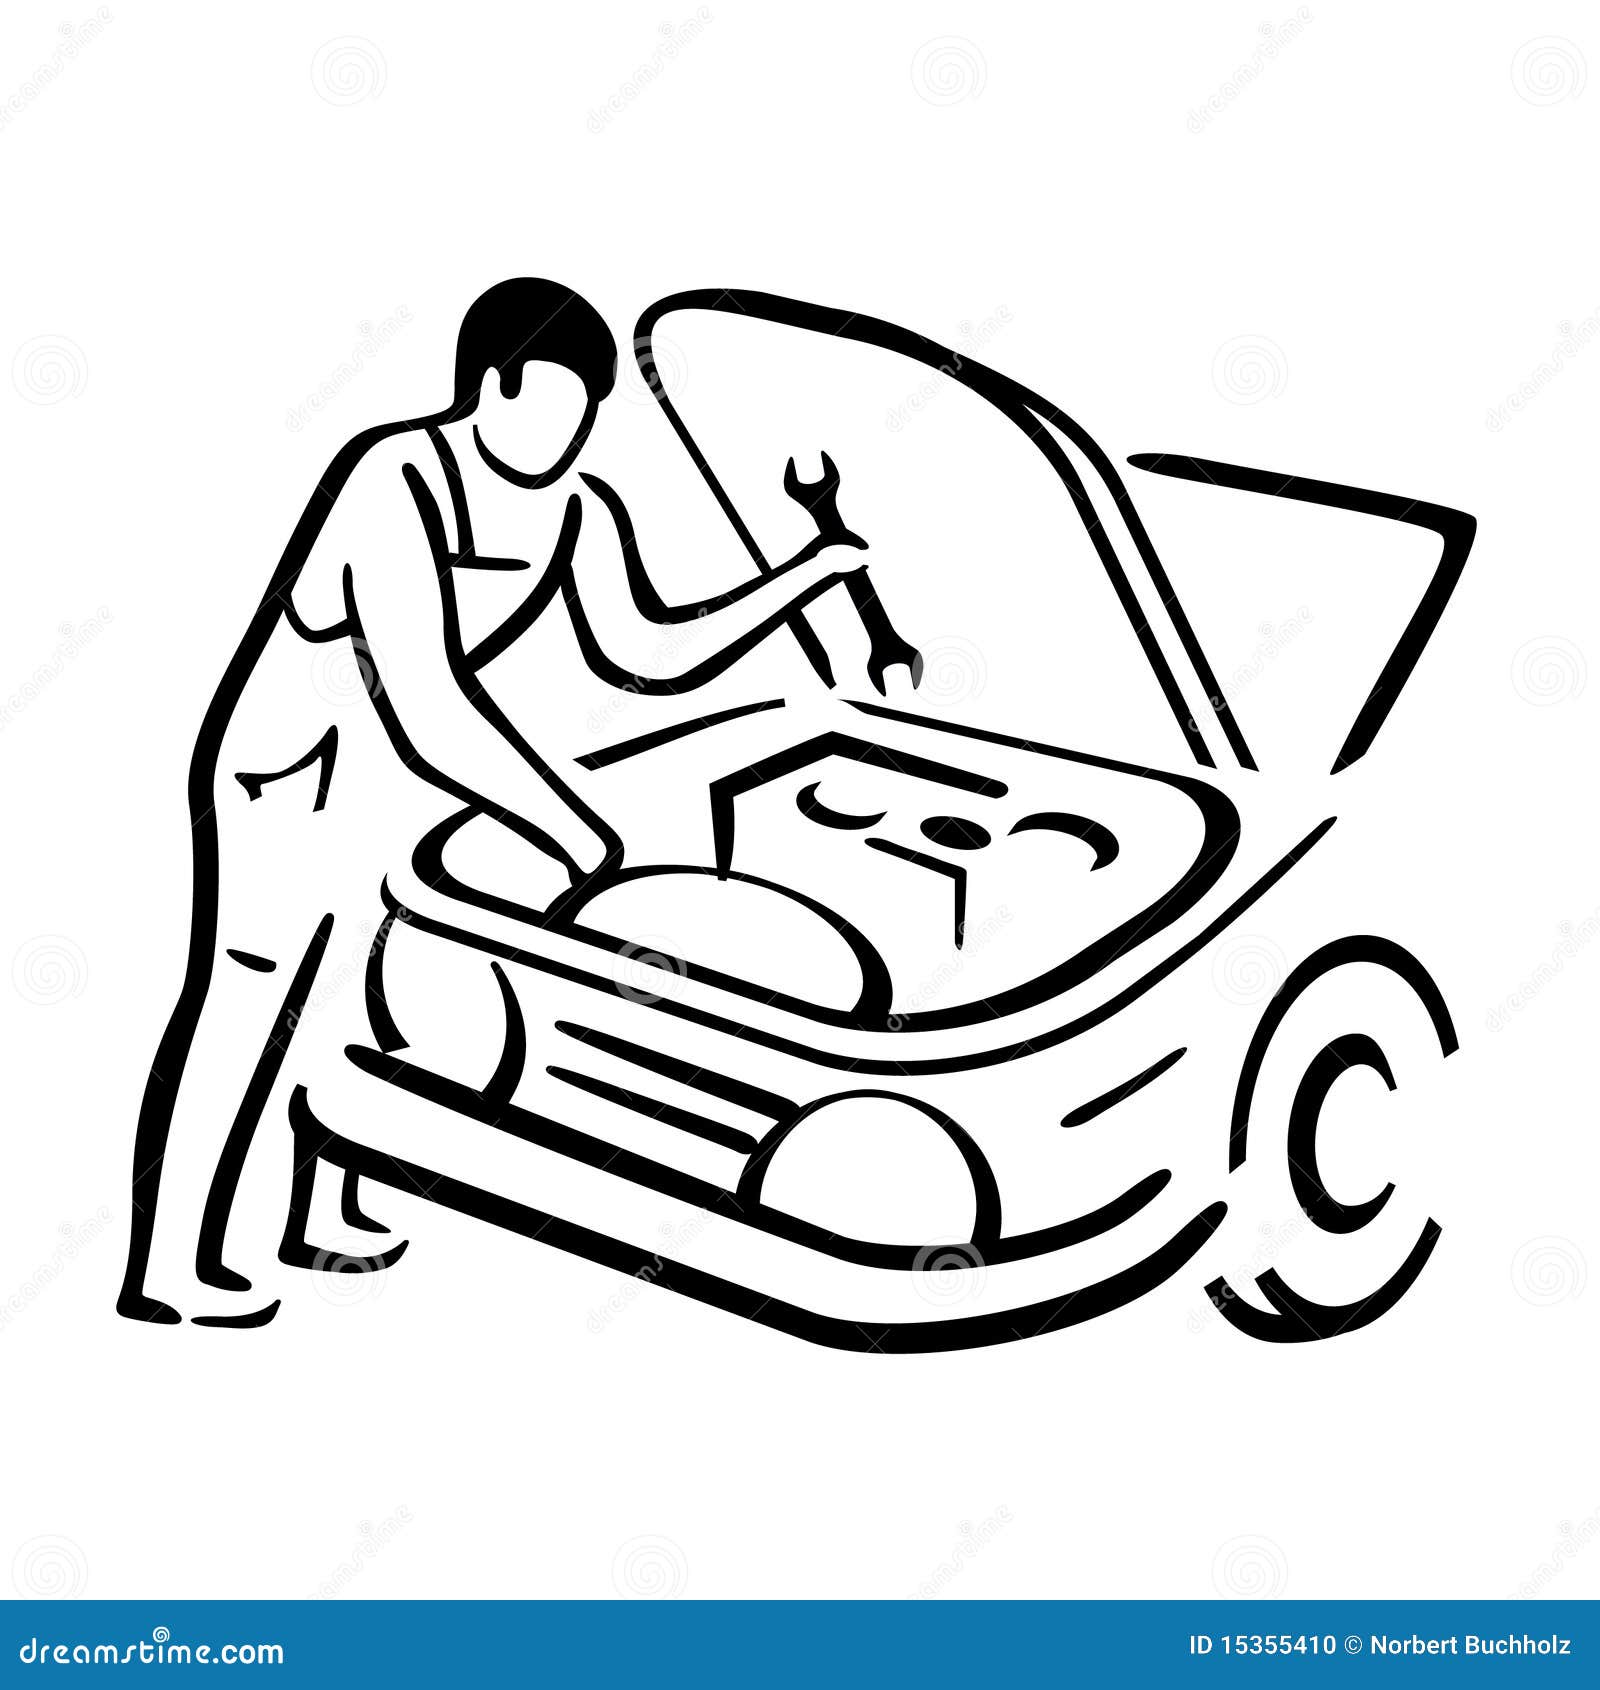 Car mechanic stock vector. Illustration of machine, service - 15355410